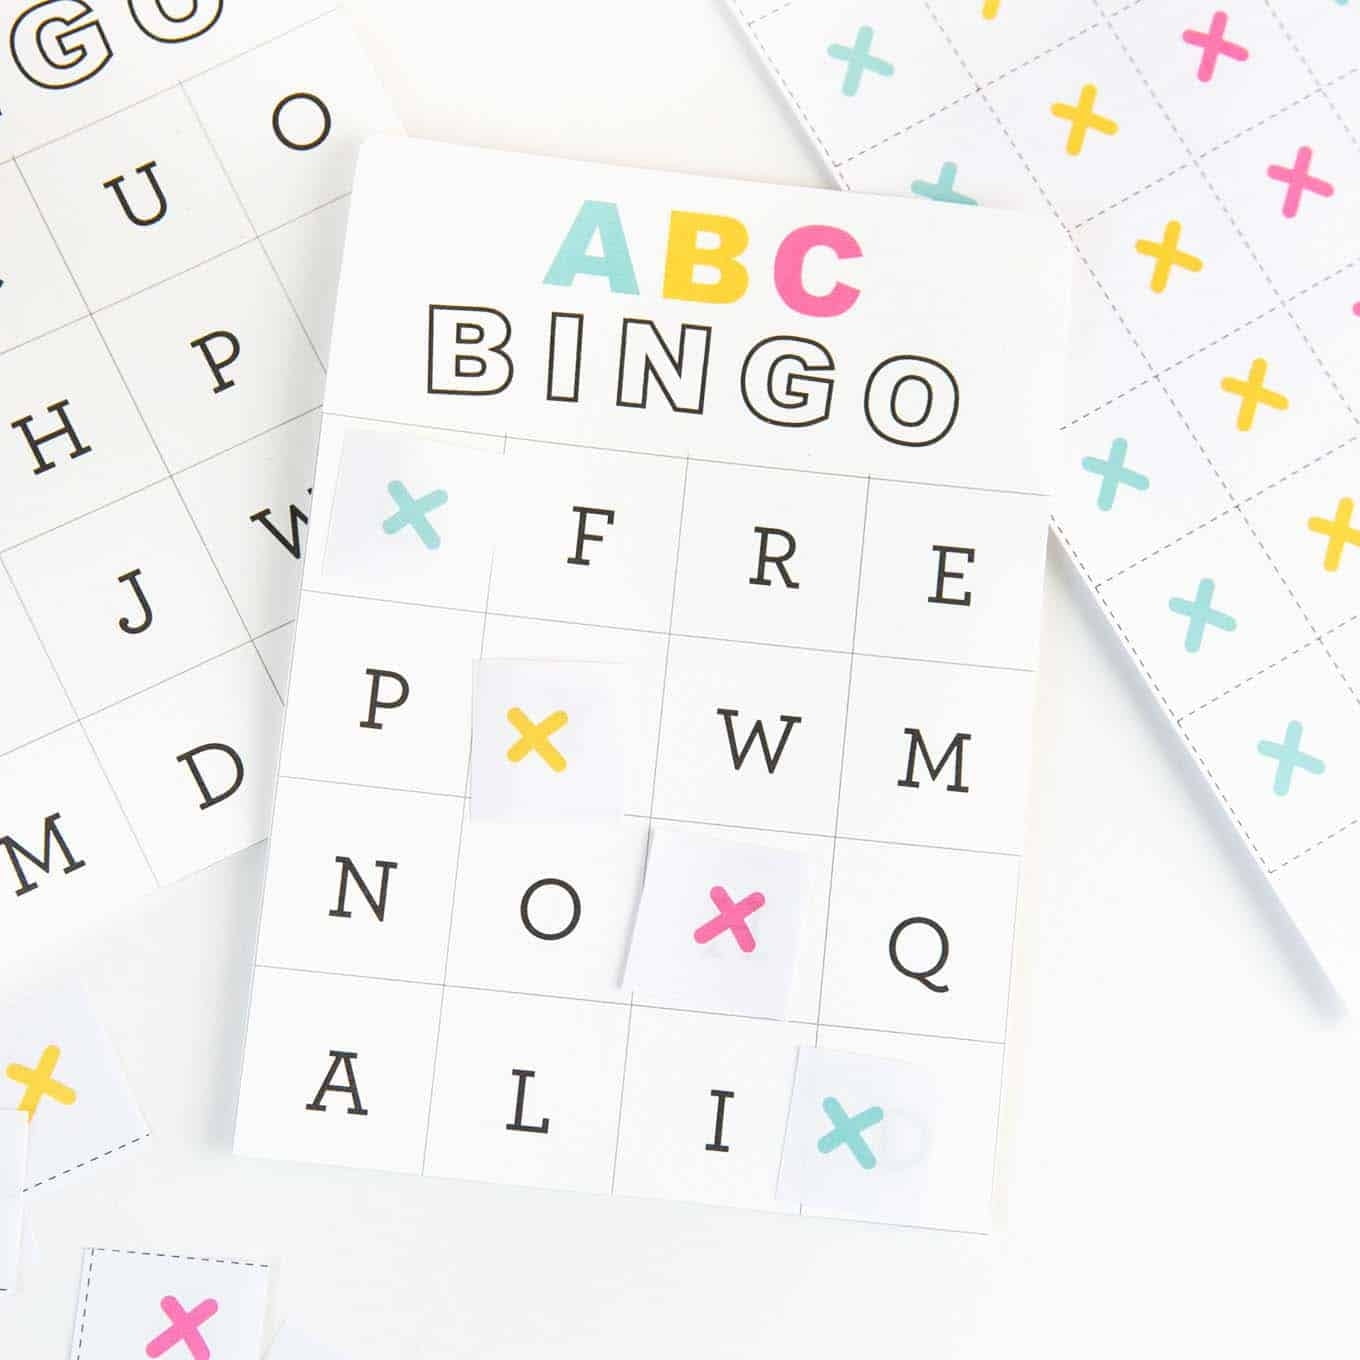 Printable Bingo Letter Cards